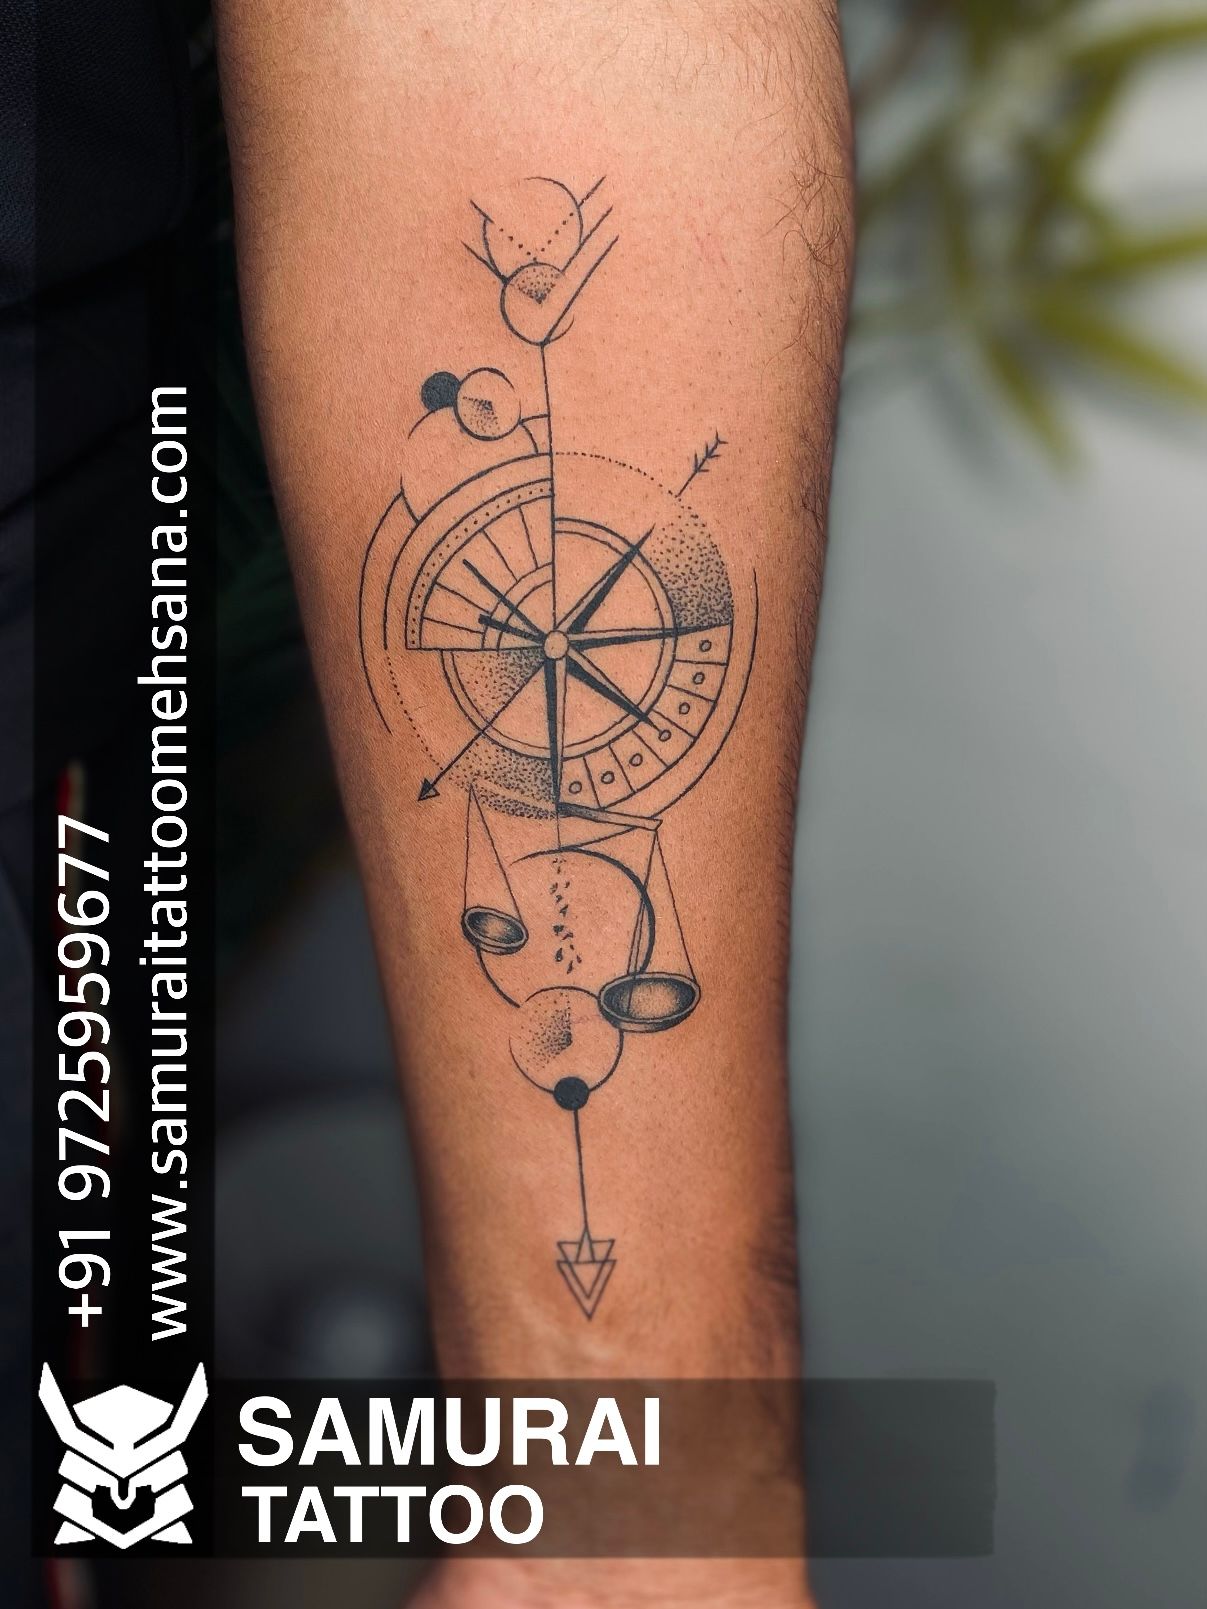 Compass Tattoo design #compasstattoo #compass #tattedboy #forearmtattoo |  Instagram